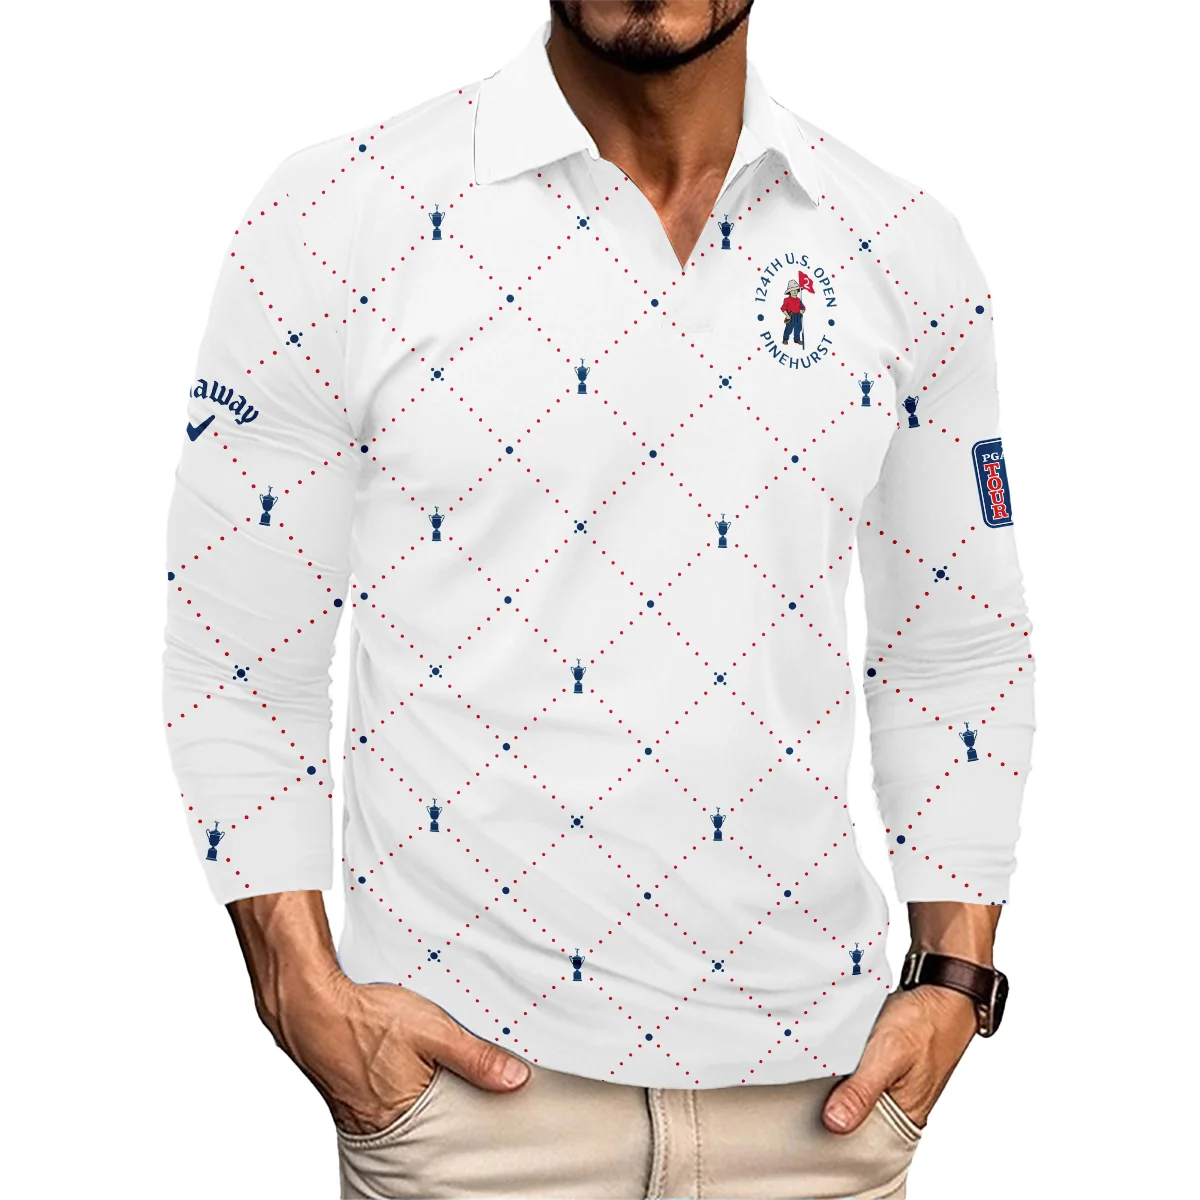 Argyle Pattern With Cup 124th U.S. Open Pinehurst Callaway Zipper Polo Shirt Style Classic Zipper Polo Shirt For Men